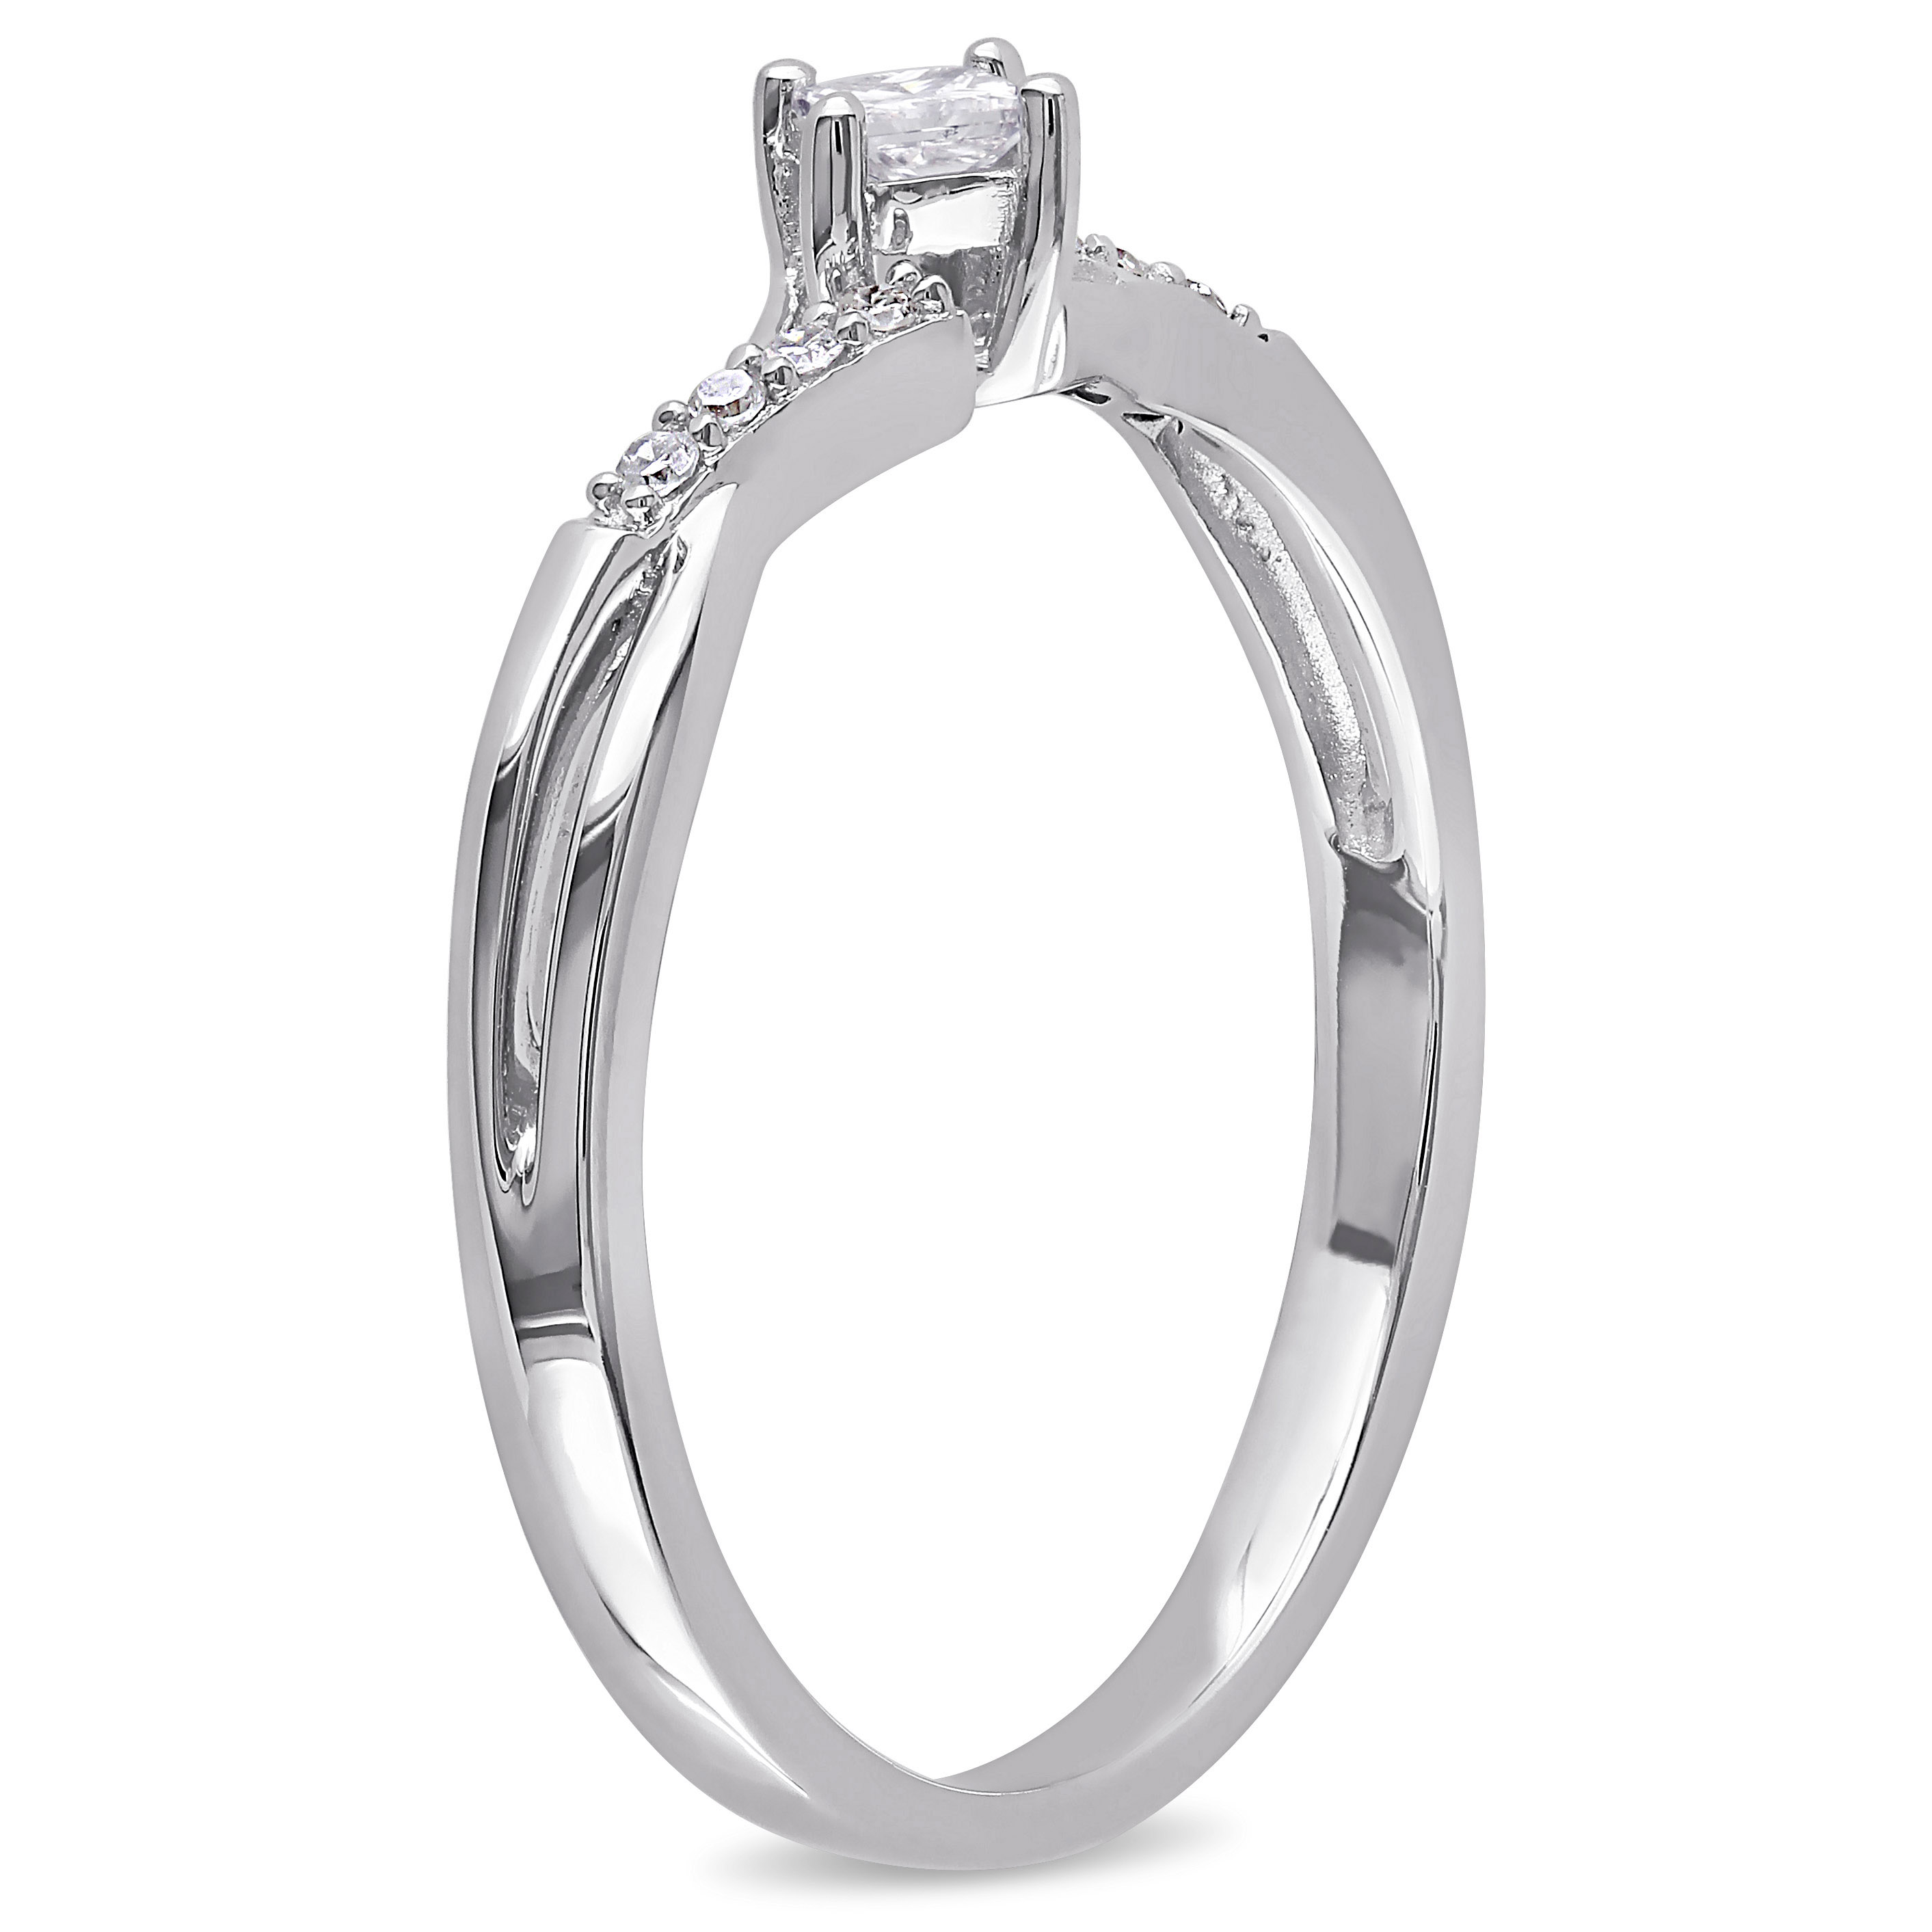 1/7 CT TW Princess Cut Diamond Engagement Ring in 10k White Gold